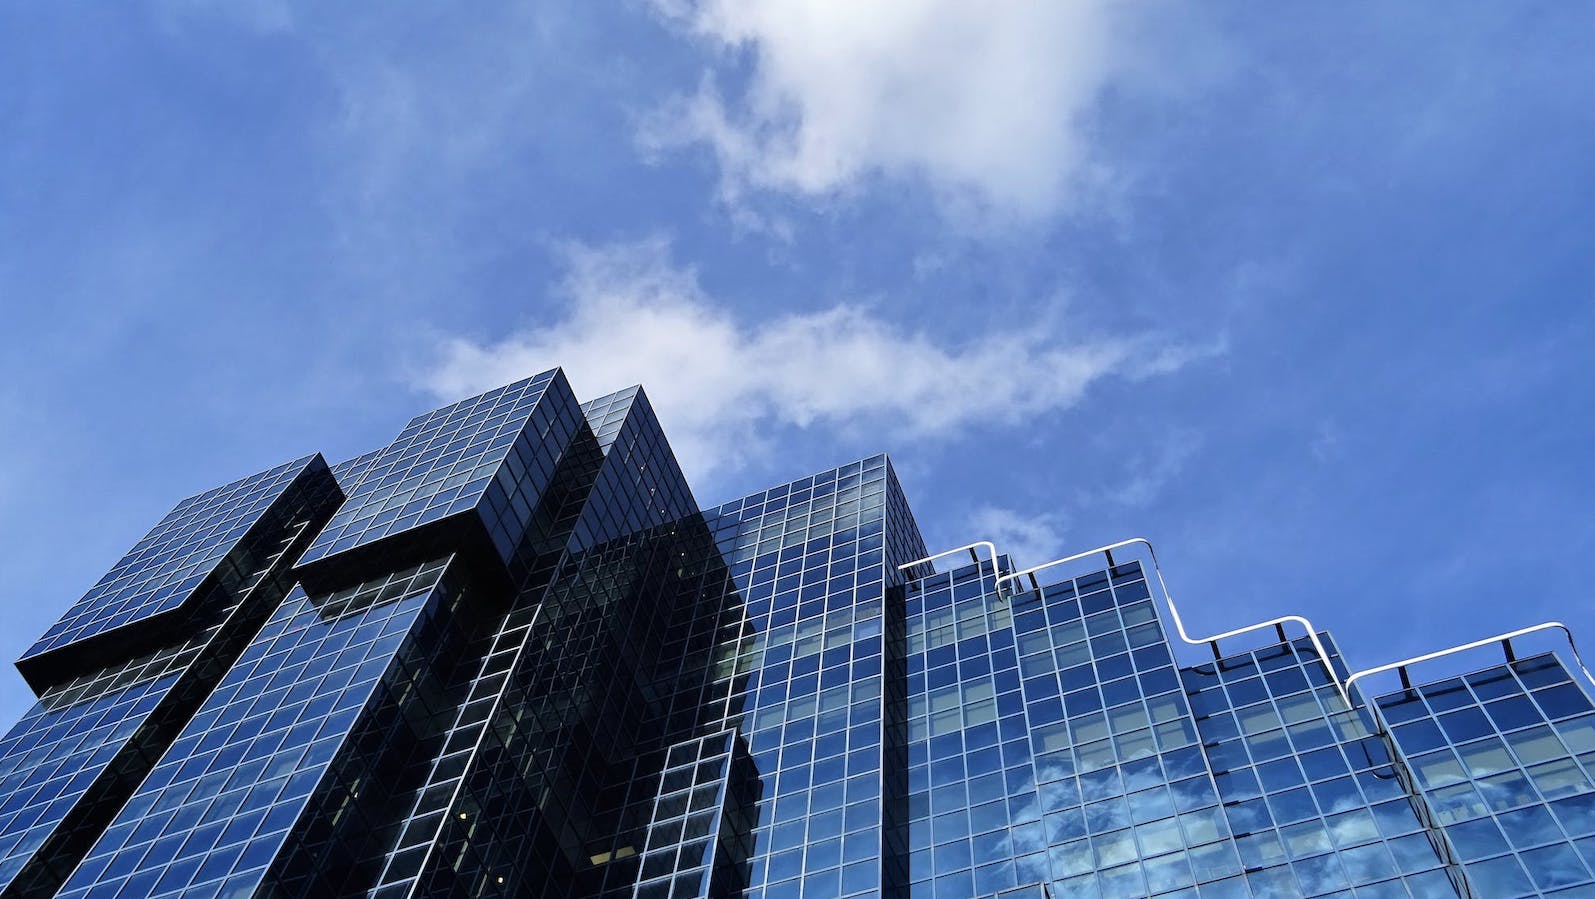 Tall glass window buildings against a blue sky